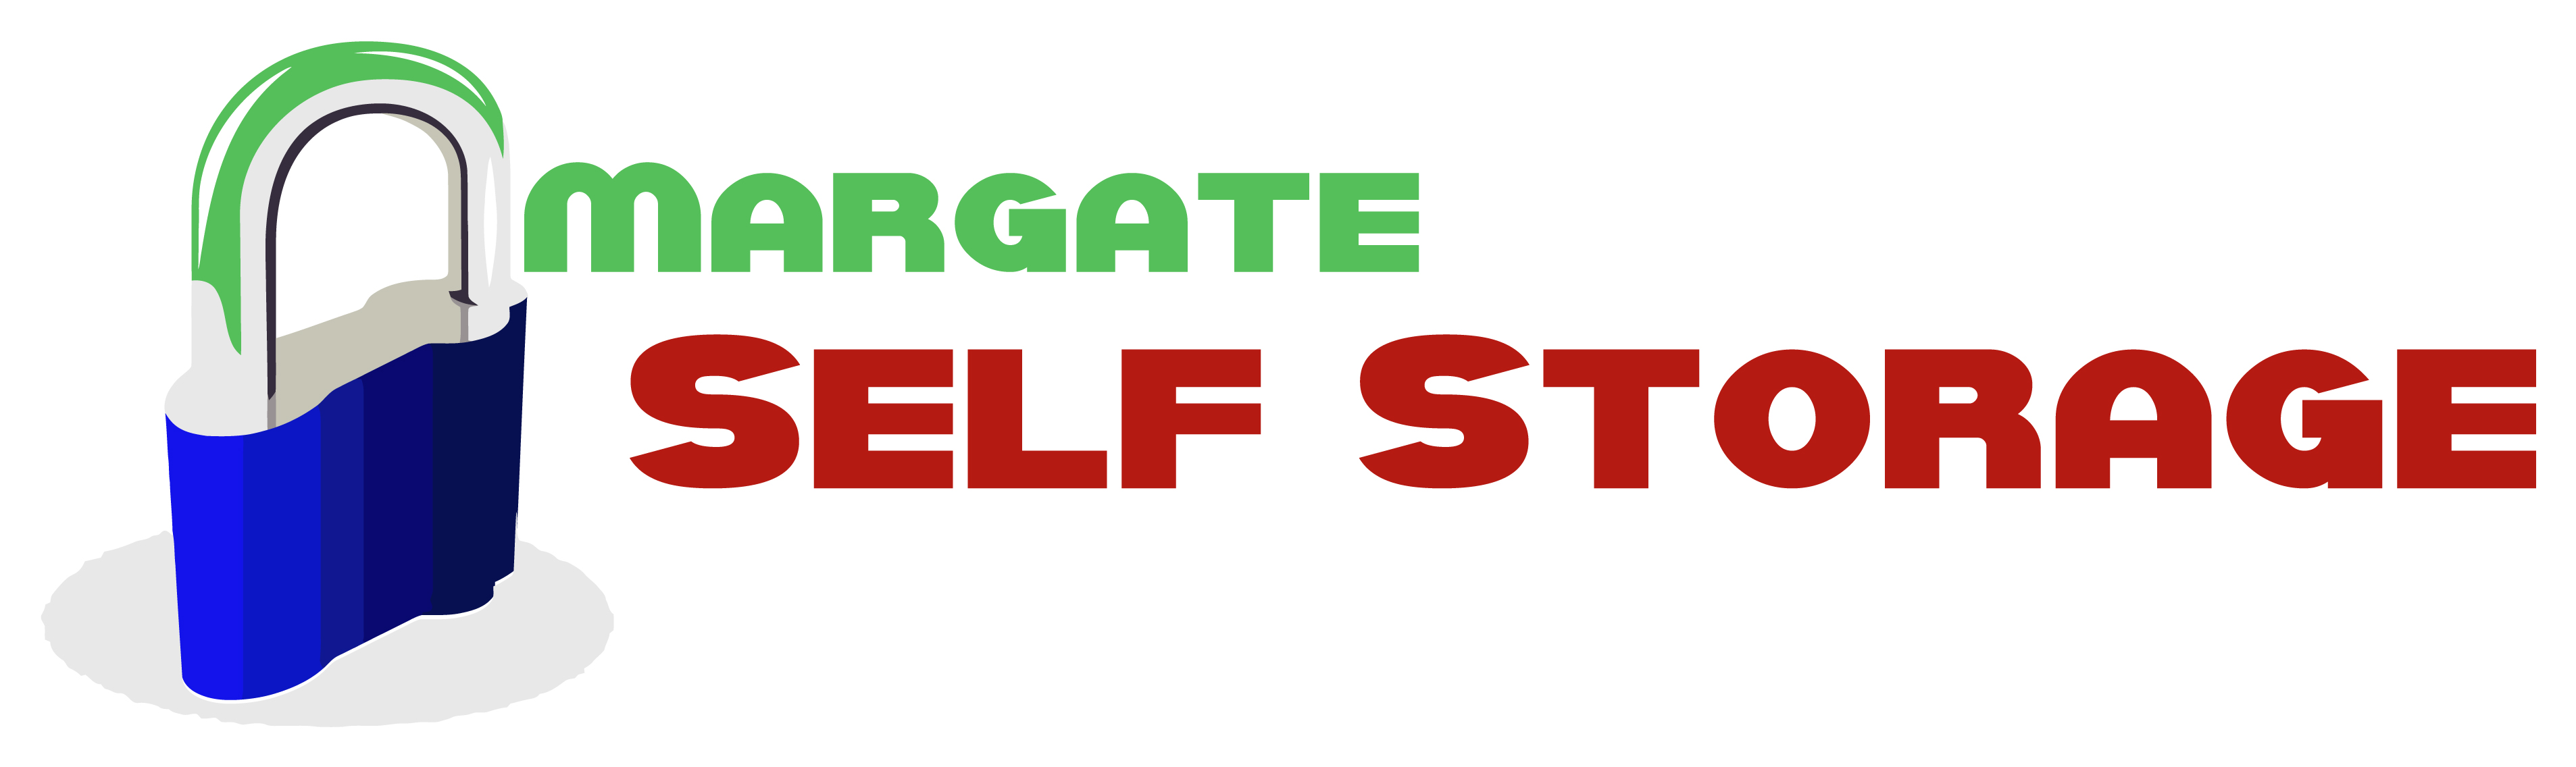 Margate Self Storage Tasmania Logo